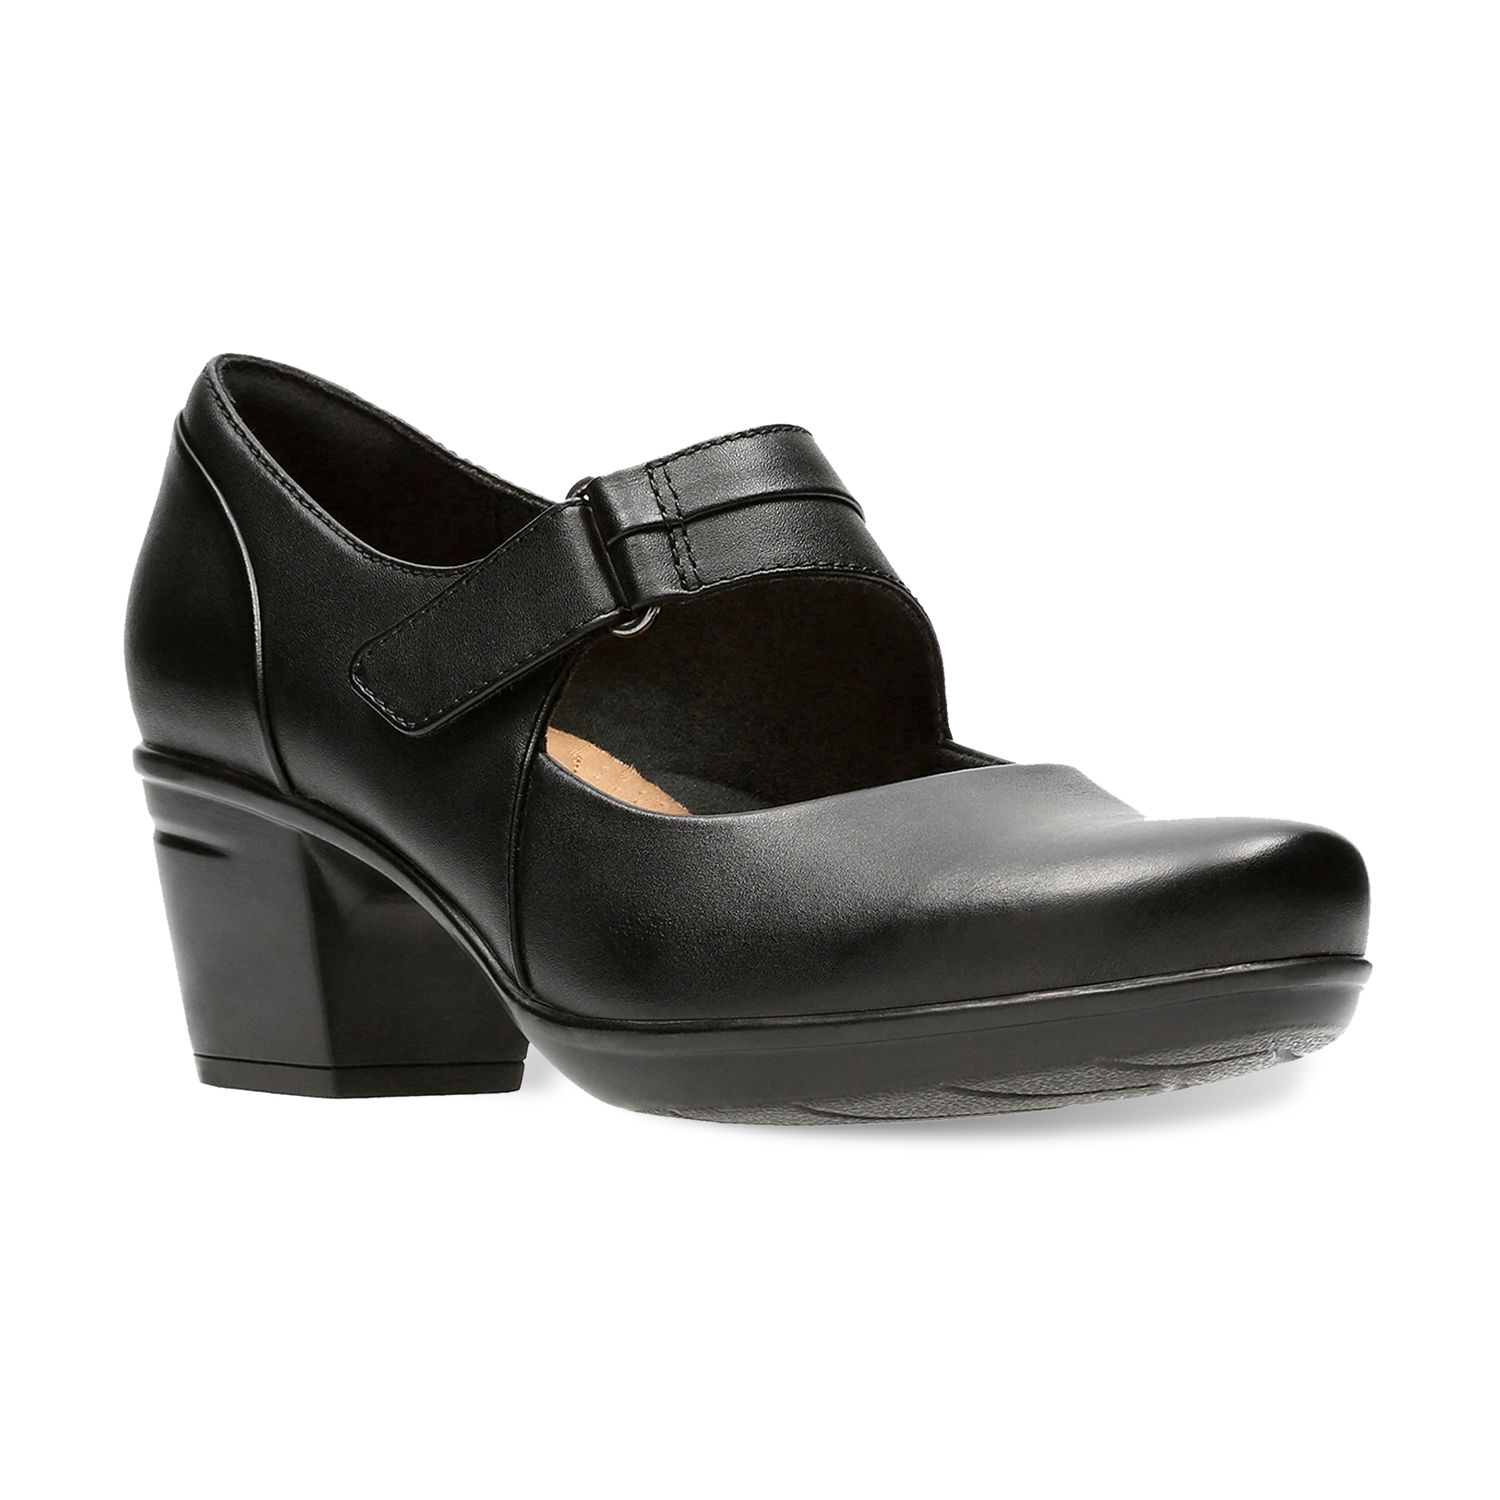 clarks women's comfort dress shoes